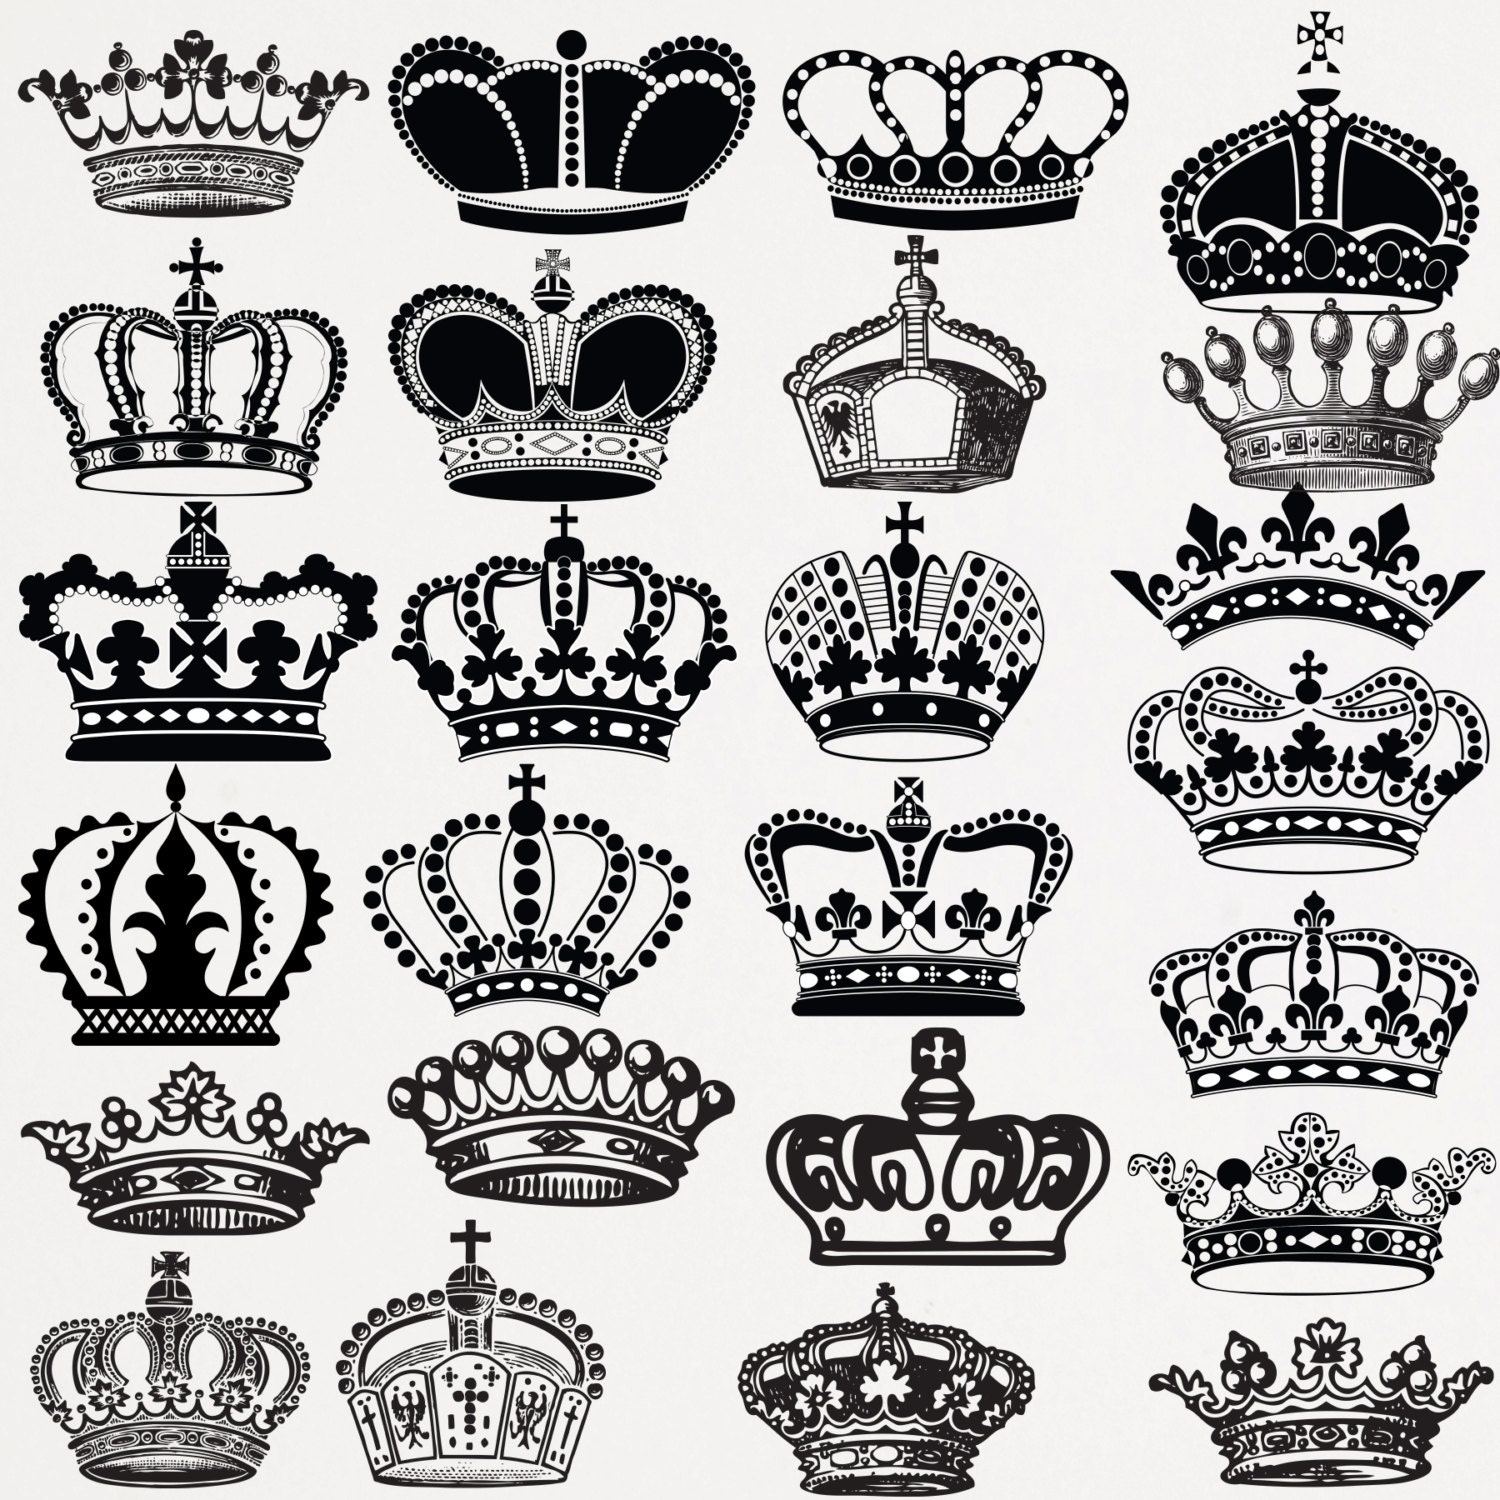 royal crown clipart images - photo #47